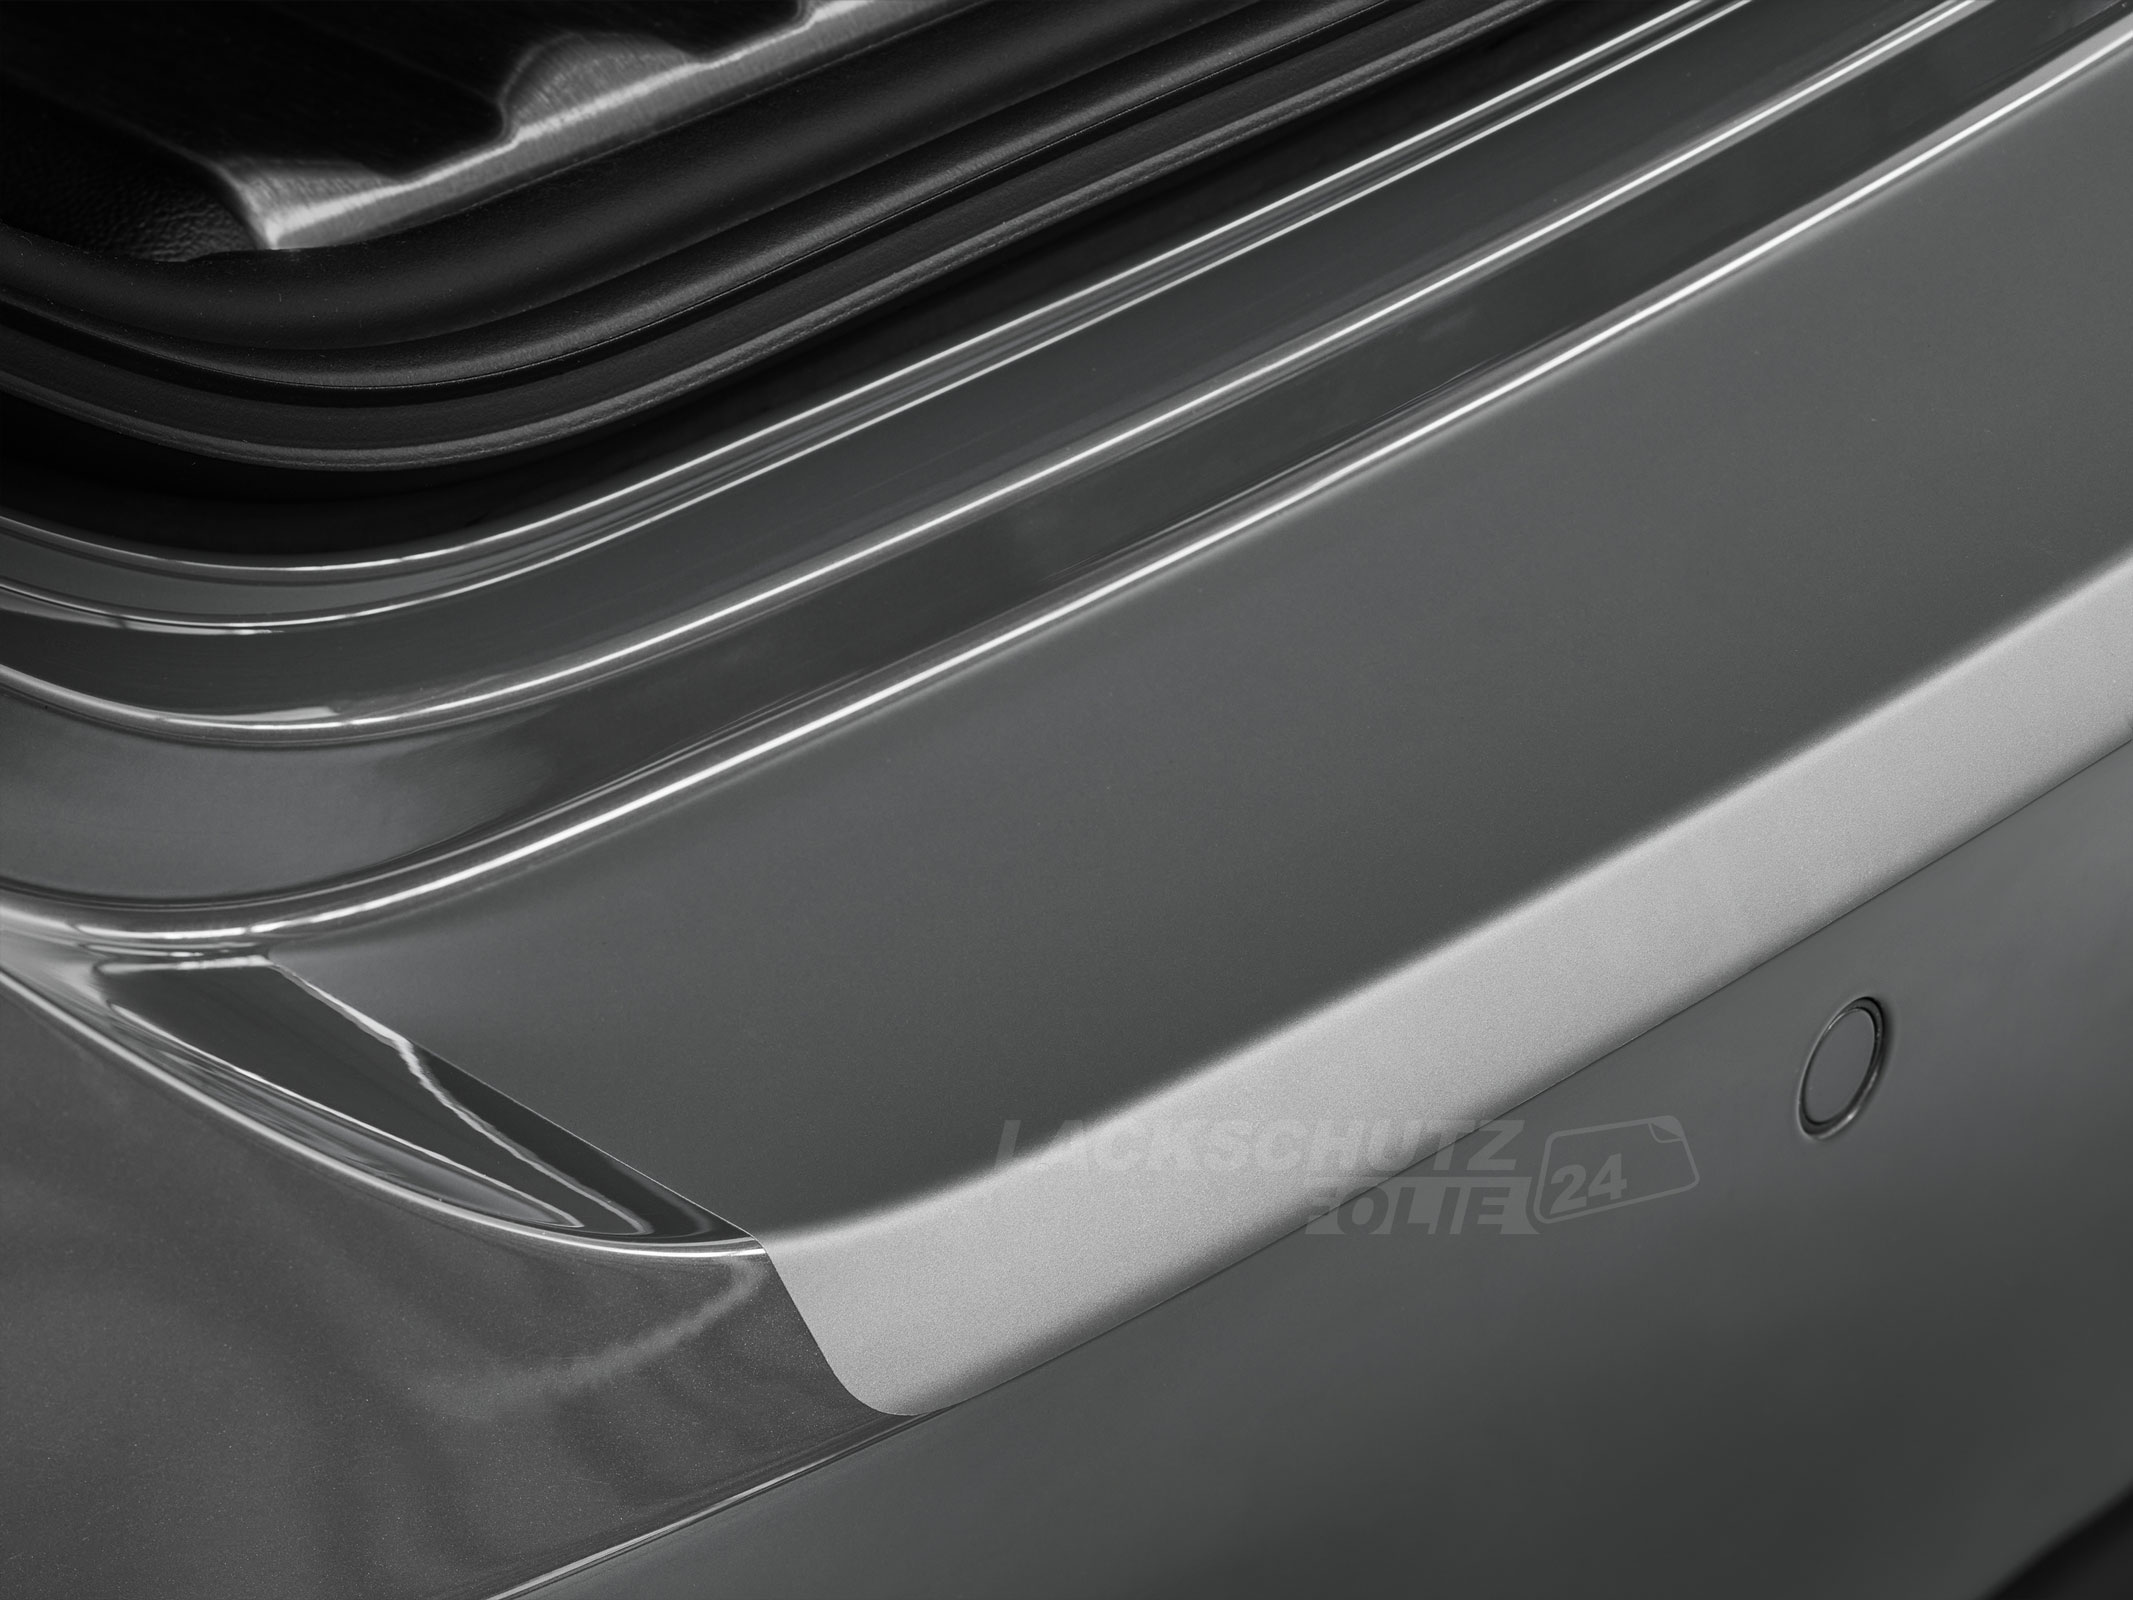 Ladekantenschutzfolie - Transparent Glatt MATT für Hyundai Santa Fe Typ CM, Facelift, BJ 2009-2012